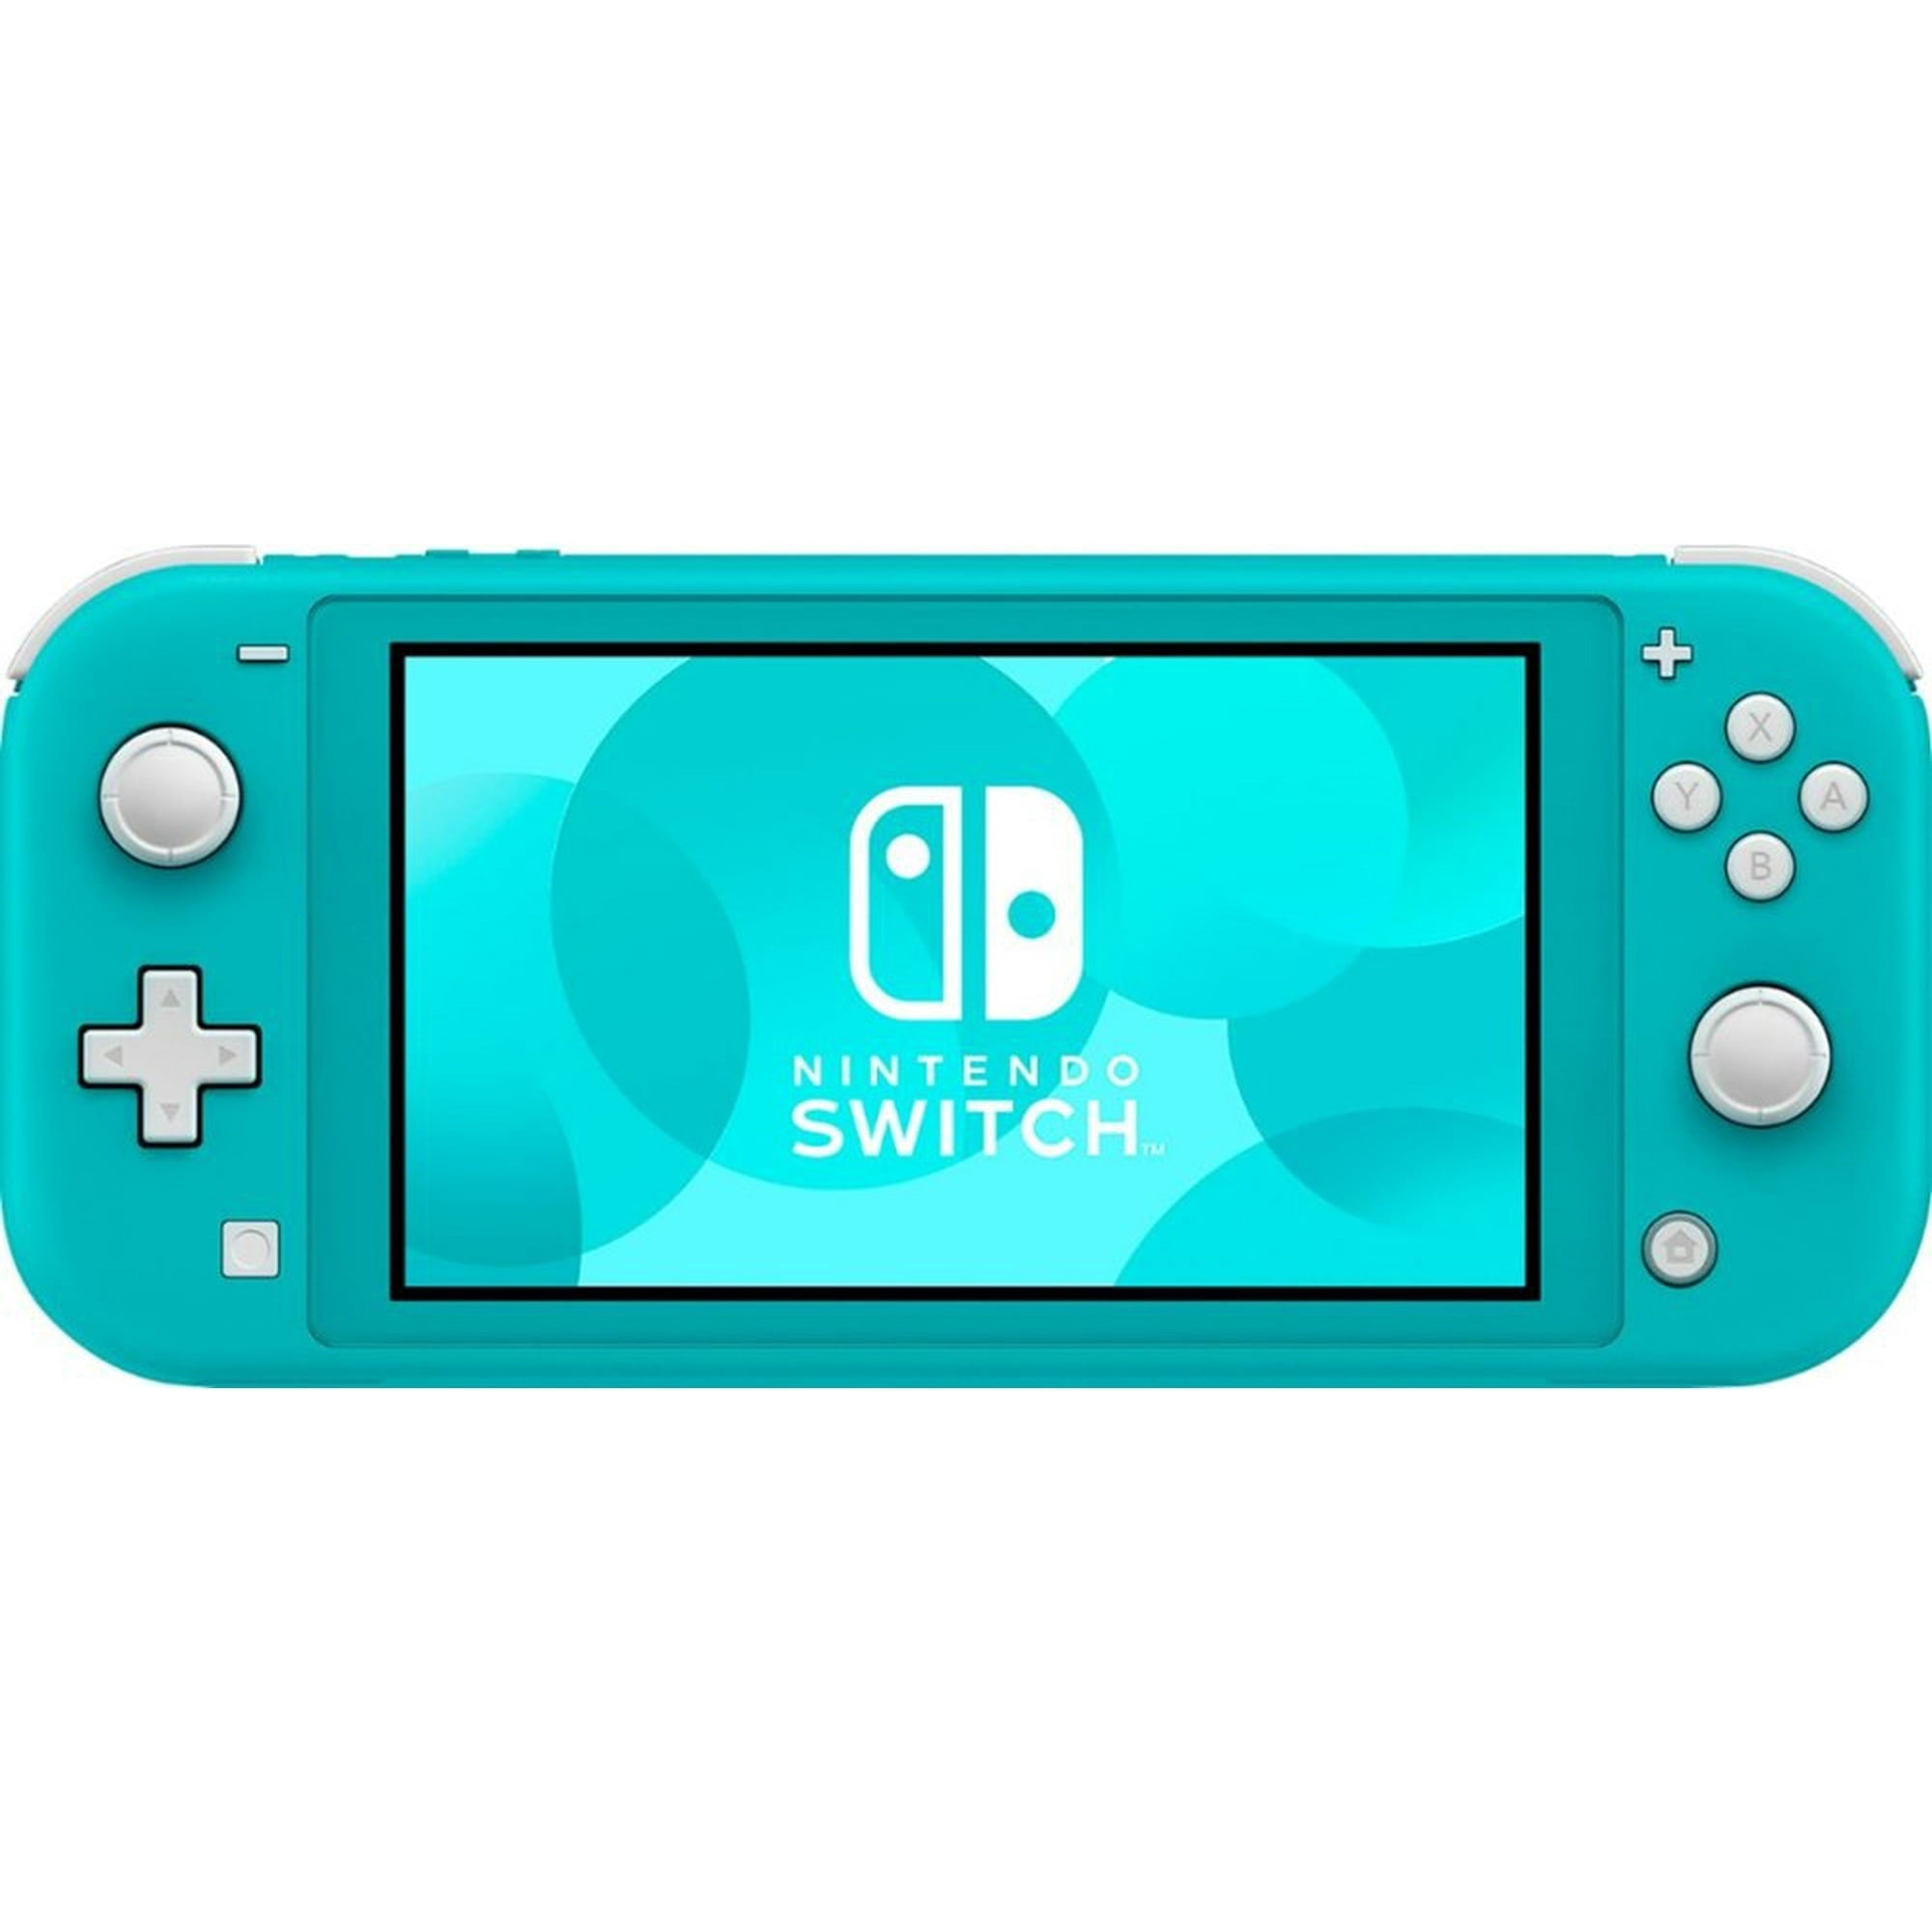 Nintendo Switch Lite Console, Turquoise - International Spec 